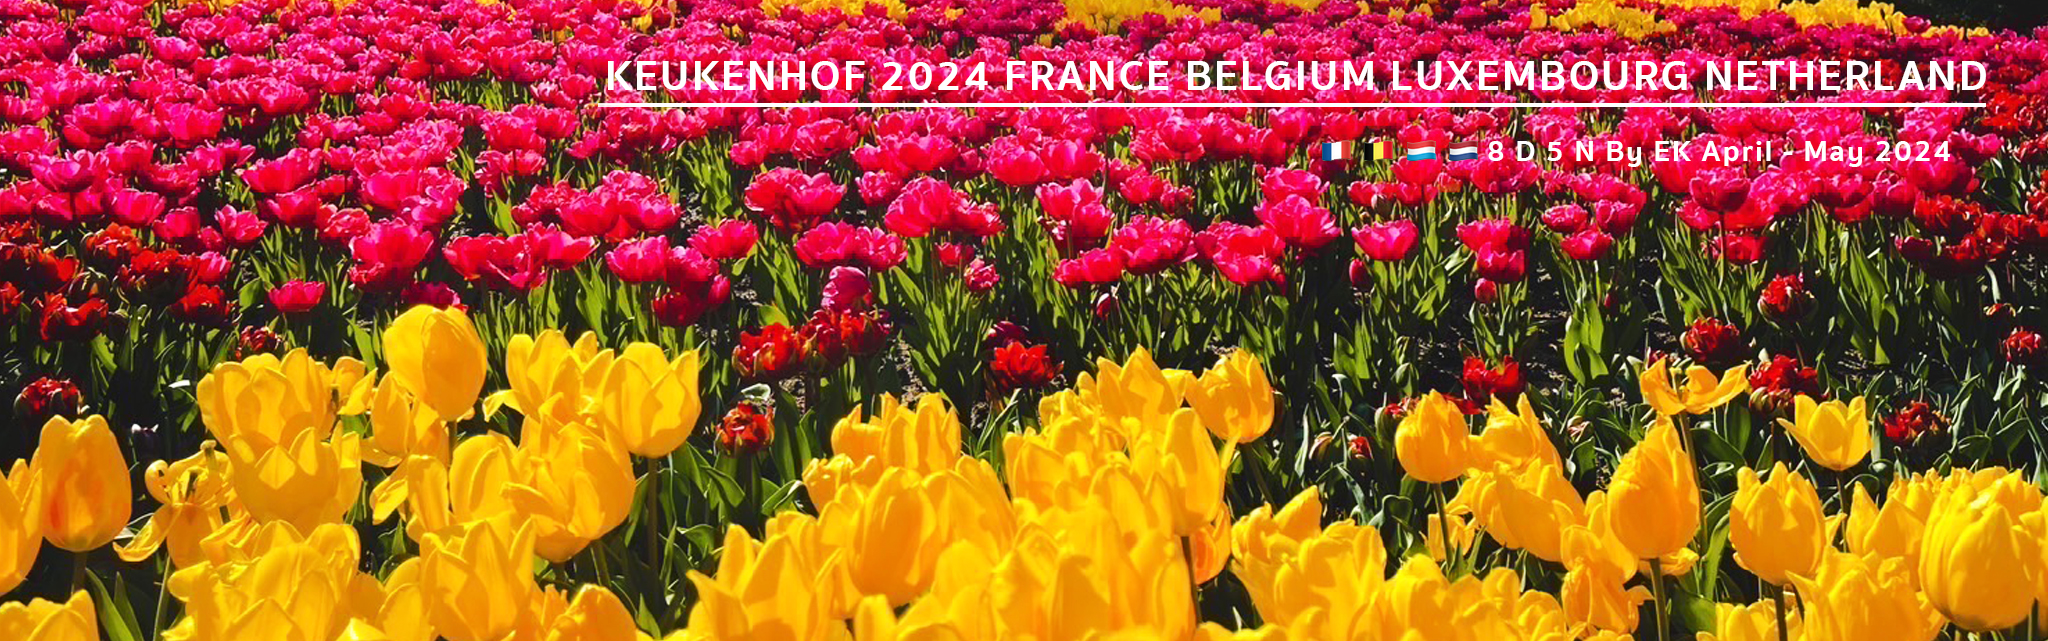 KEUKENHOF 2024 FRANCE BELGIUM LUXEMBOURG NETHERLAND